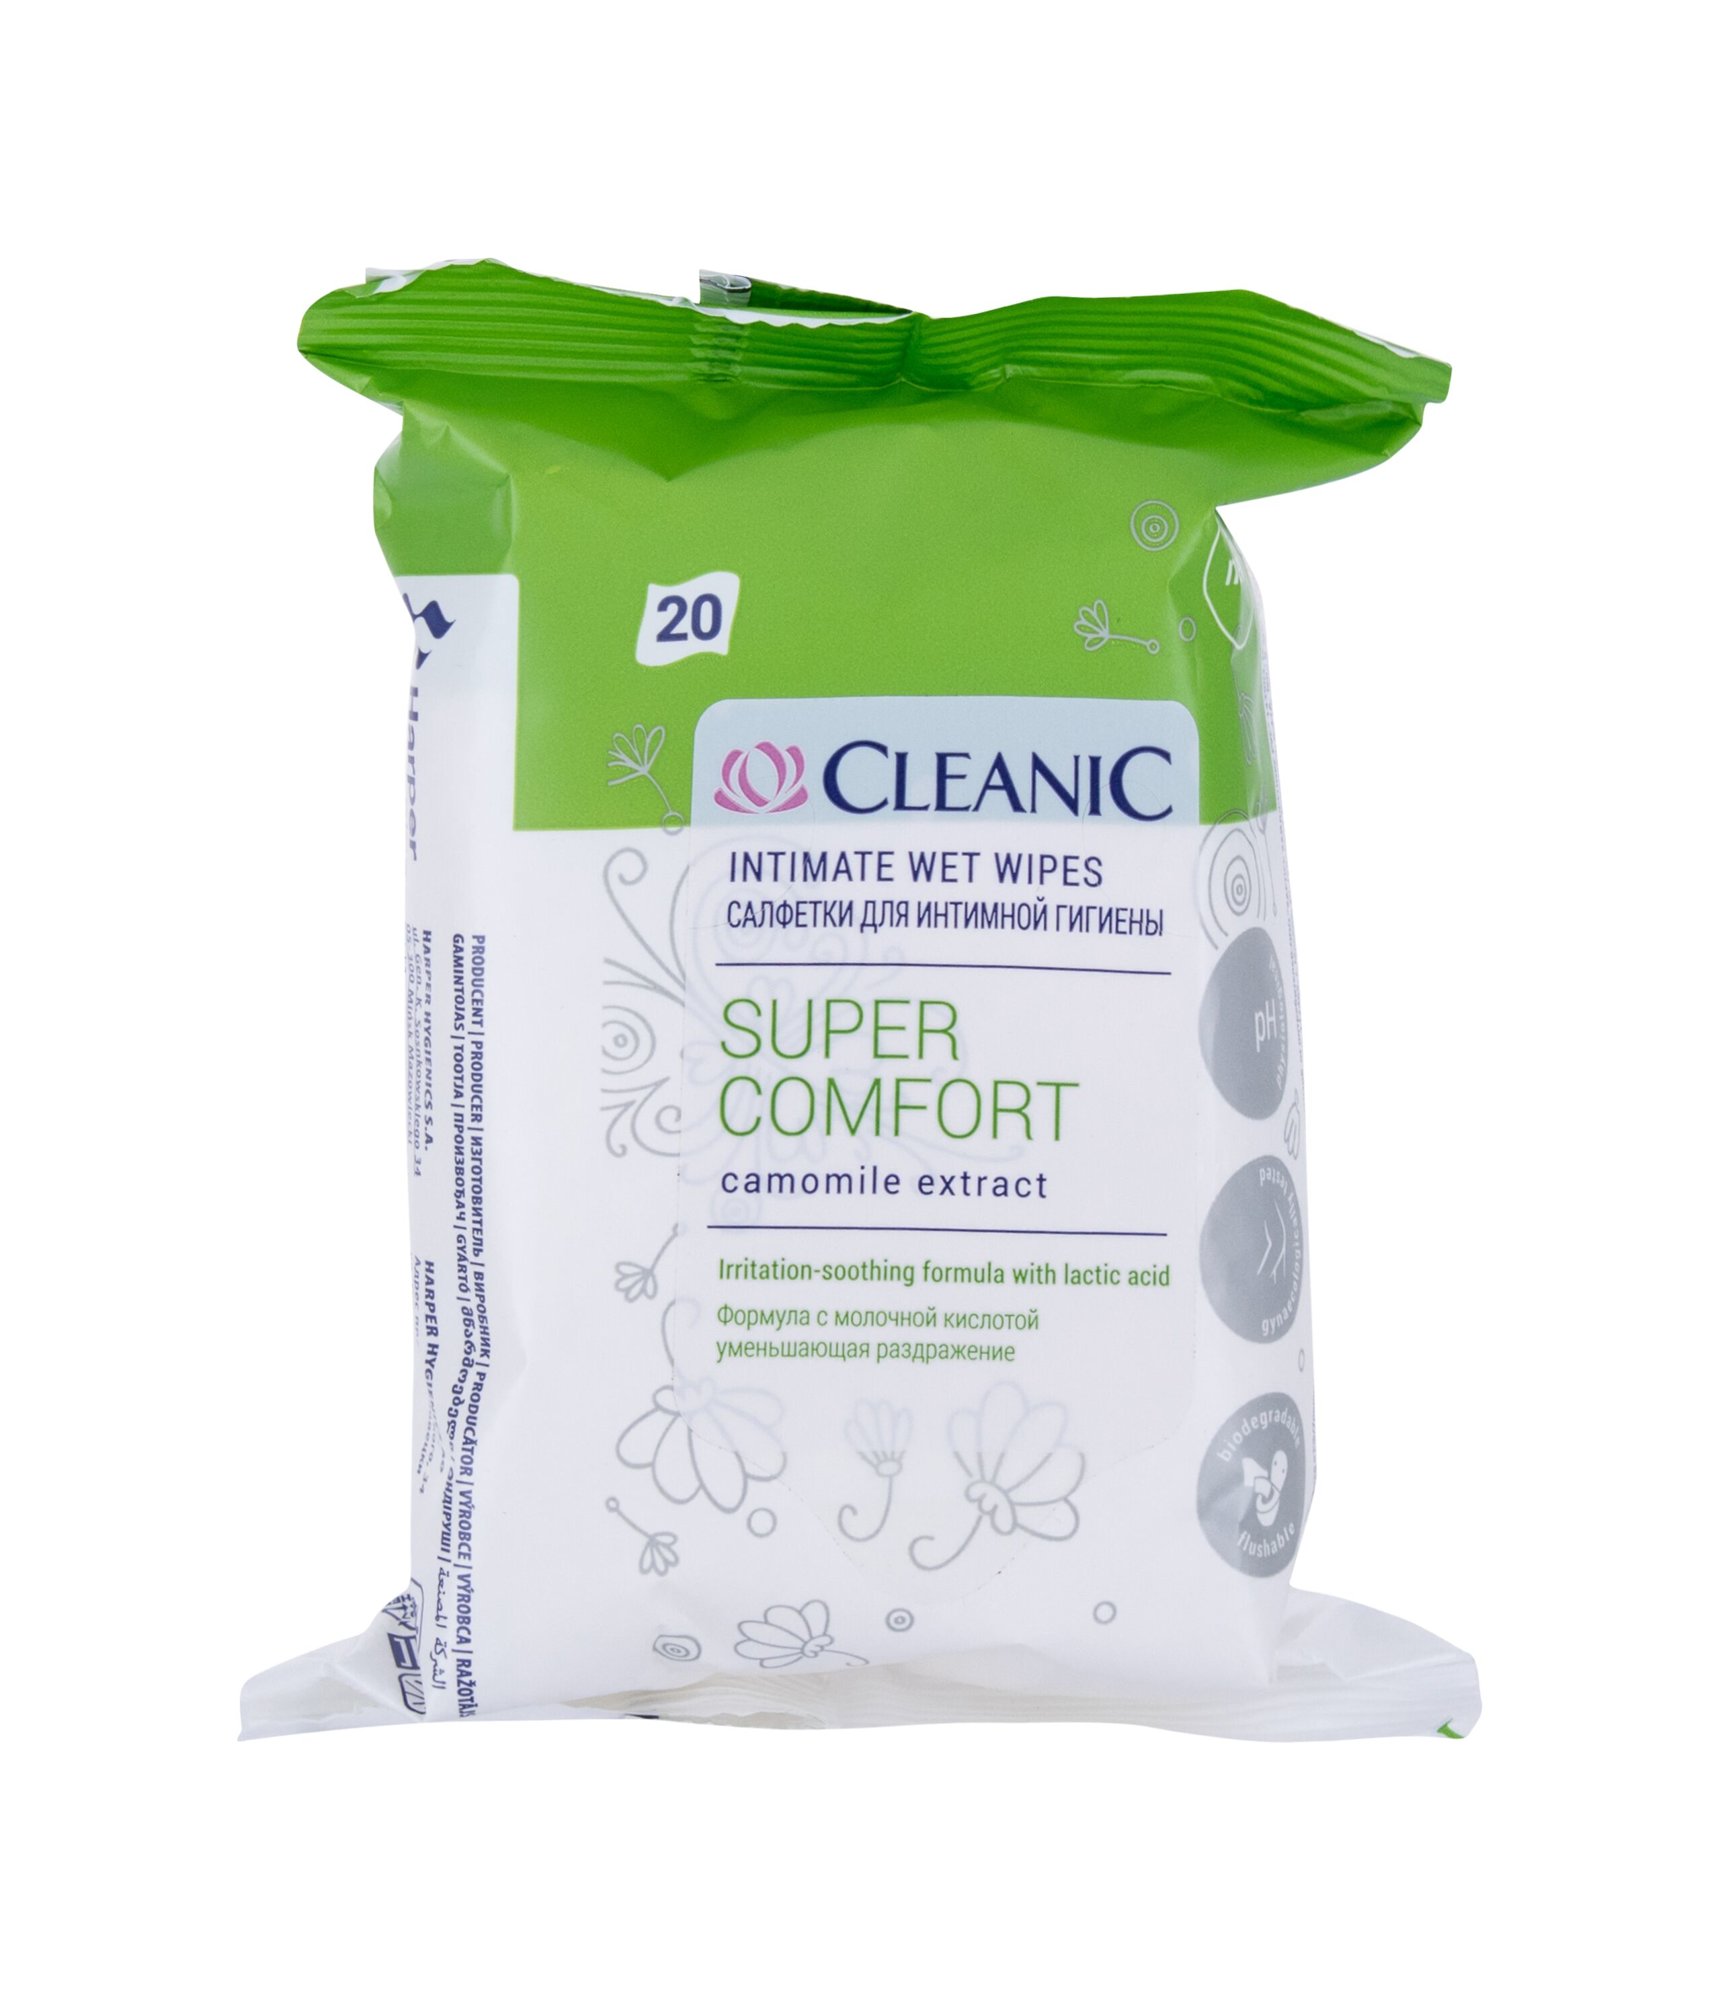 Cleanic Super Comfort Camomile intymios higienos priežiūra